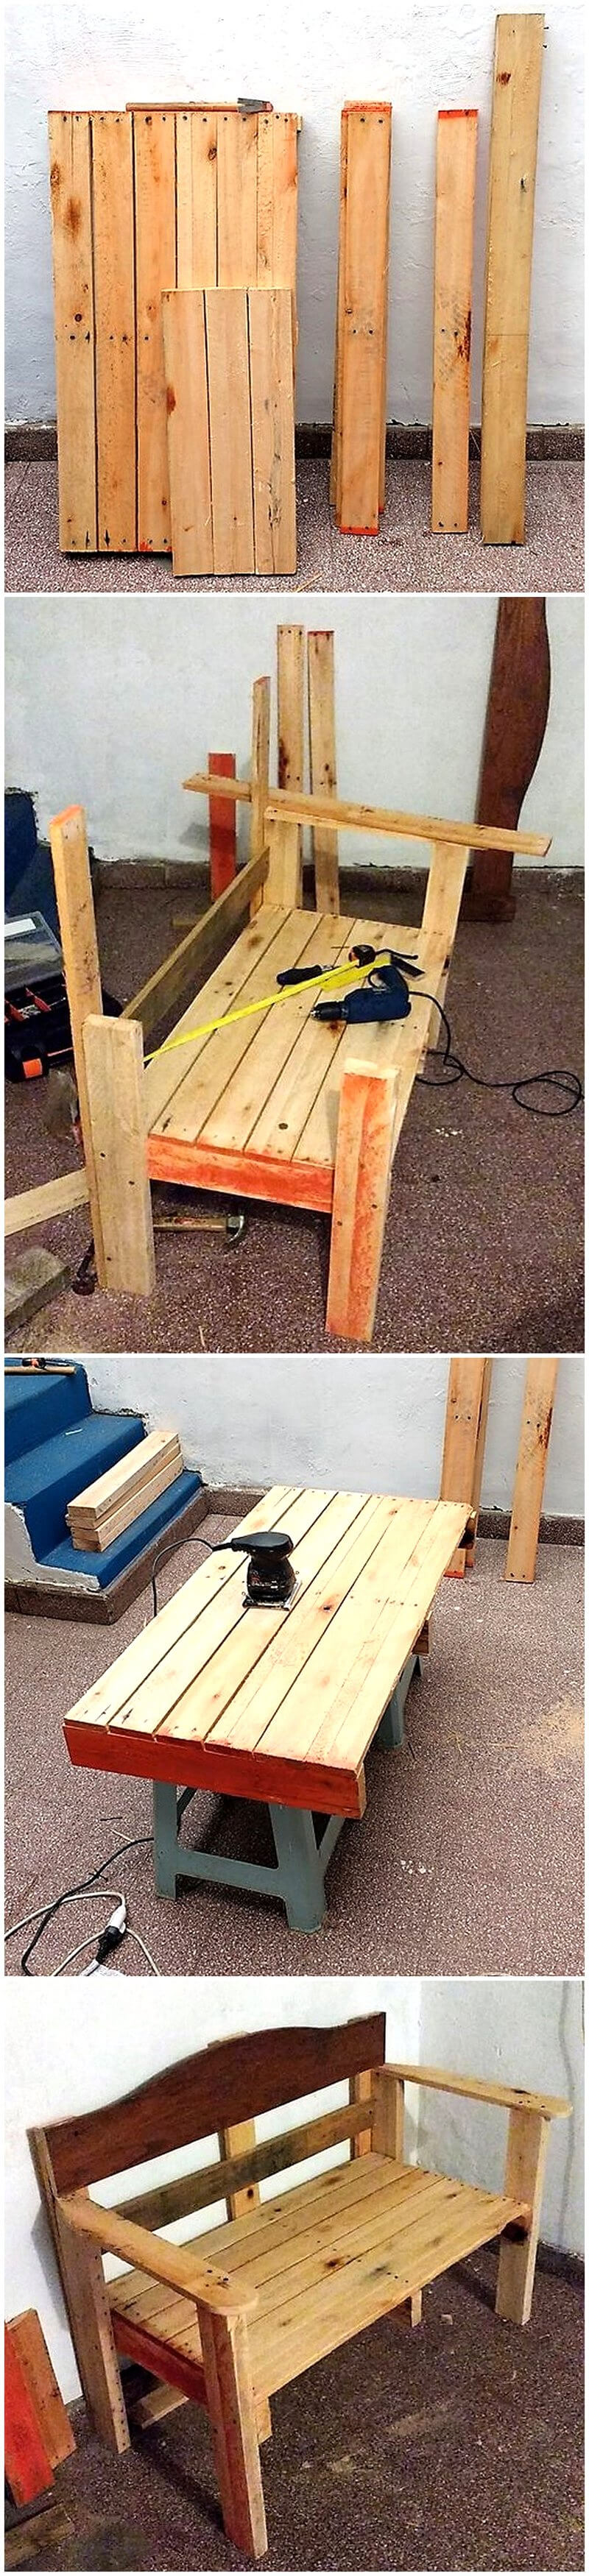 diy wooden pallets bench